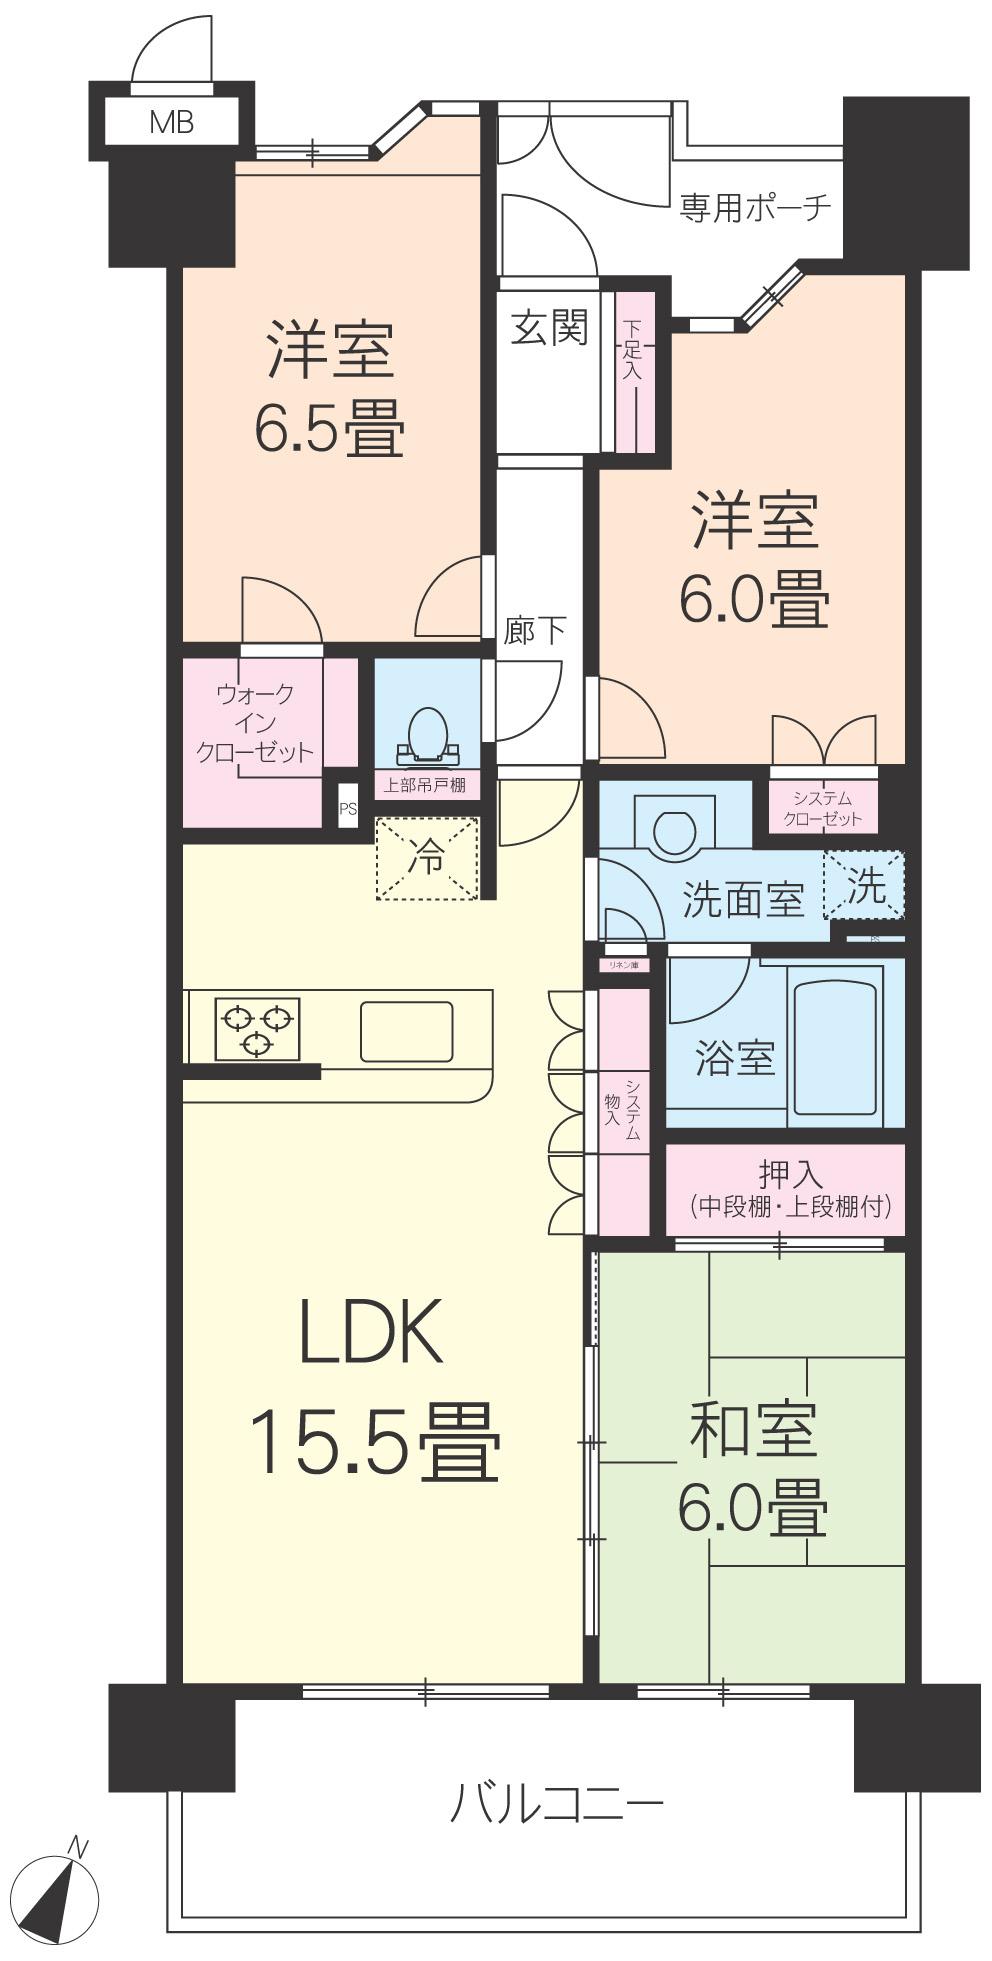 Floor plan. 3LDK, Price 18.3 million yen, Occupied area 74.15 sq m , Balcony area 12 sq m